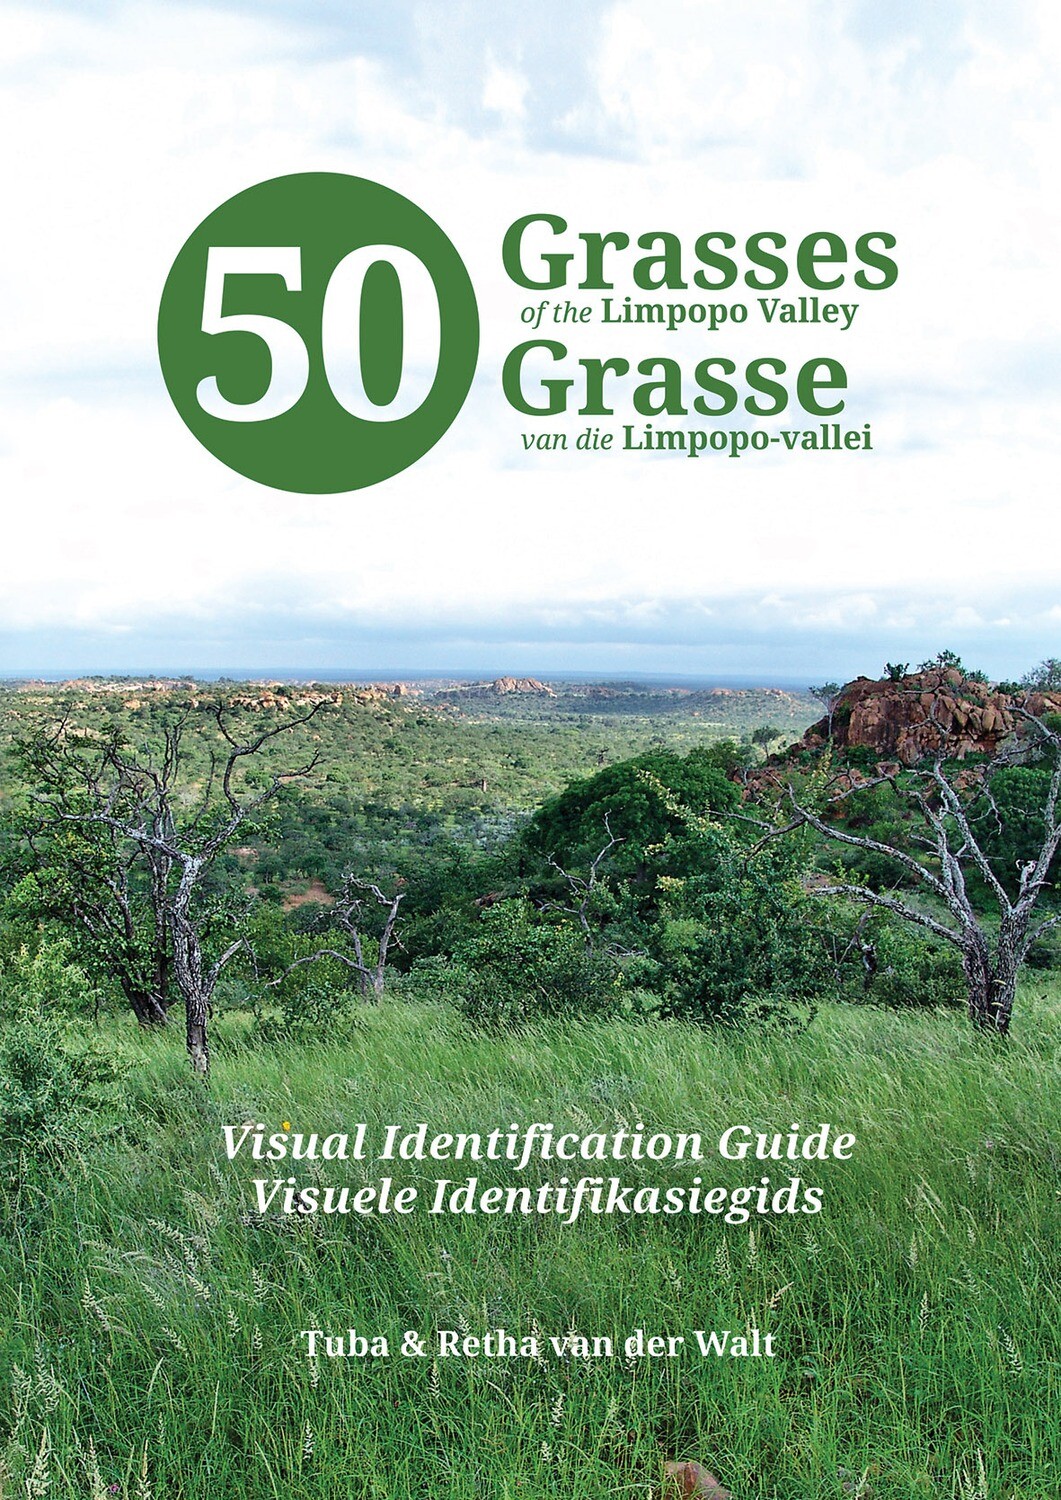 50 Grasses of the Limpopo Valley / 50 Grasse van die Limpopo-vallei